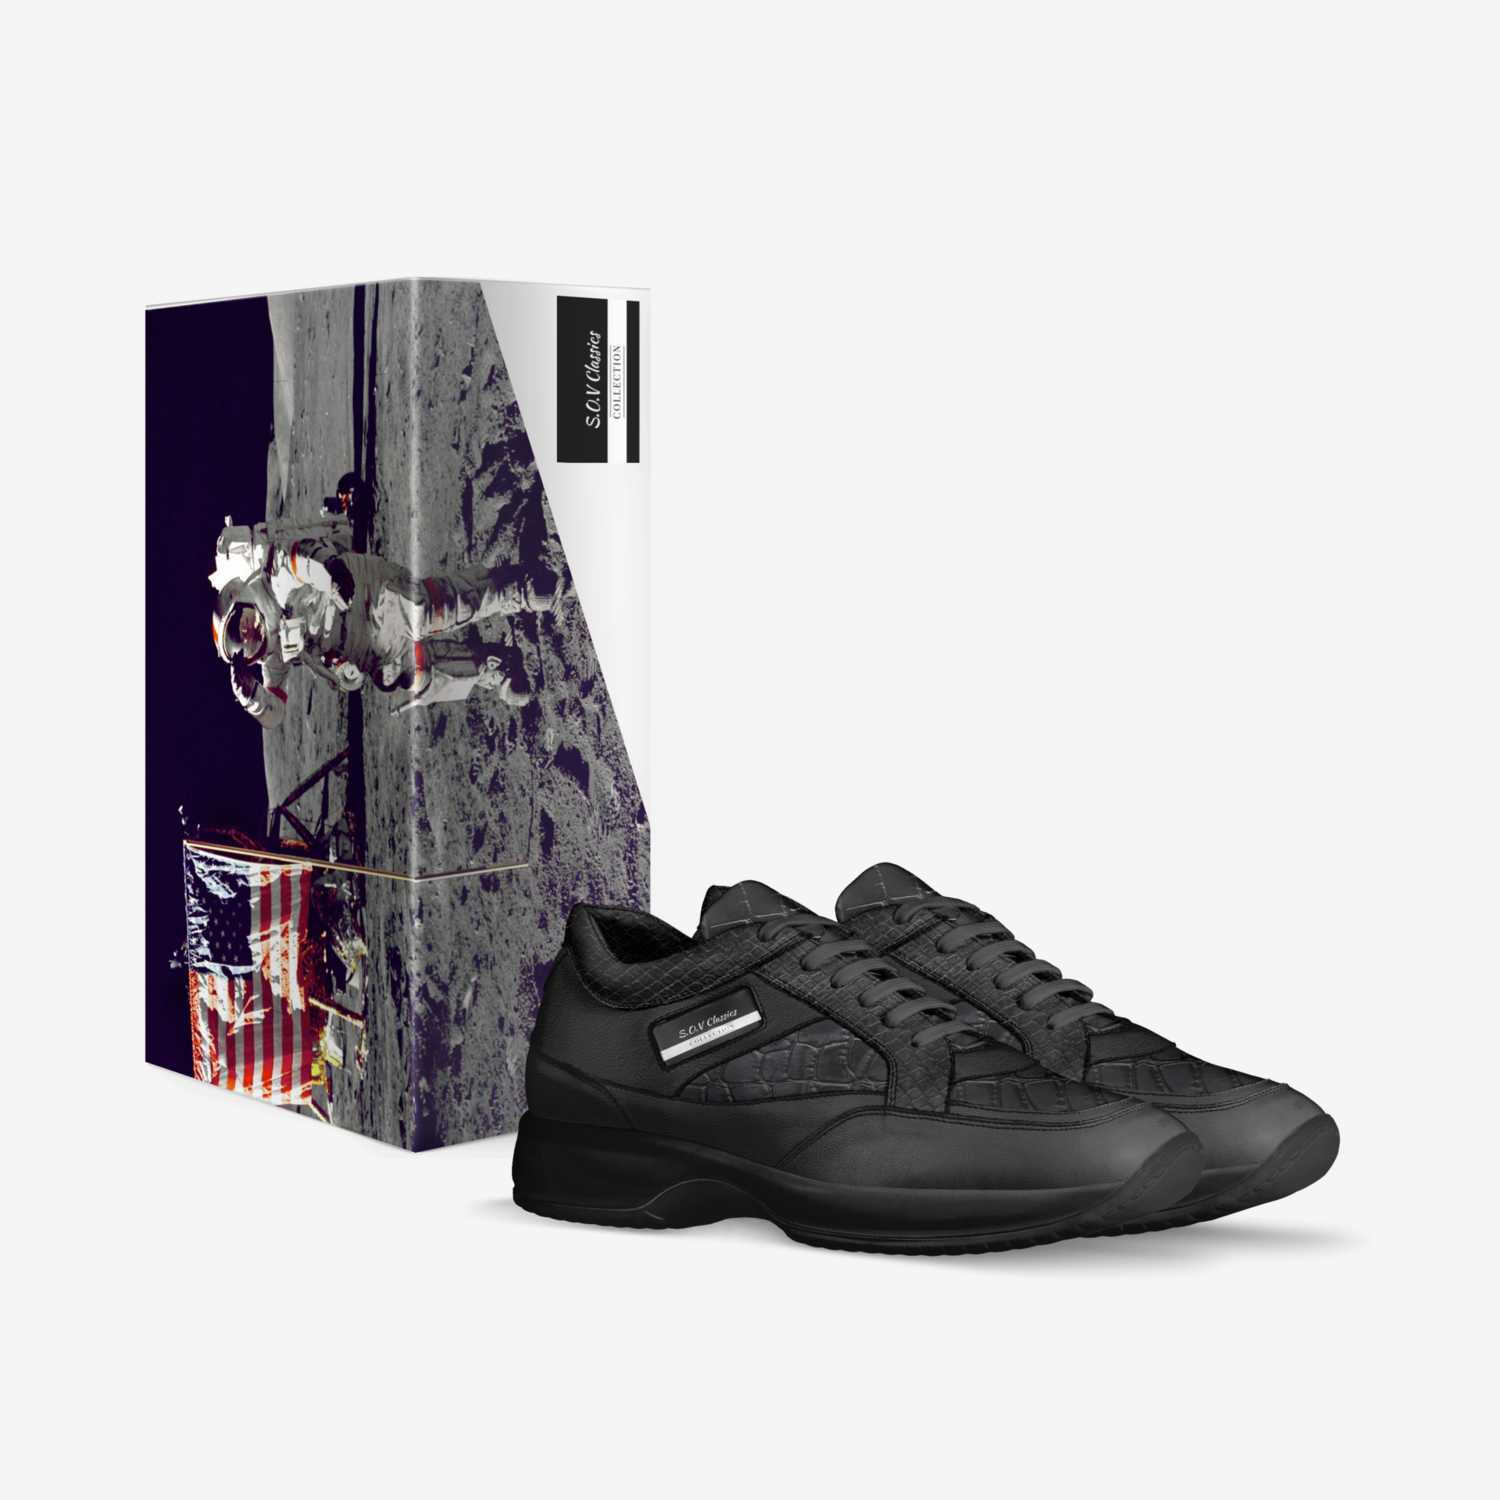 S.O.V Classics custom made in Italy shoes by Samad Lamb | Box view